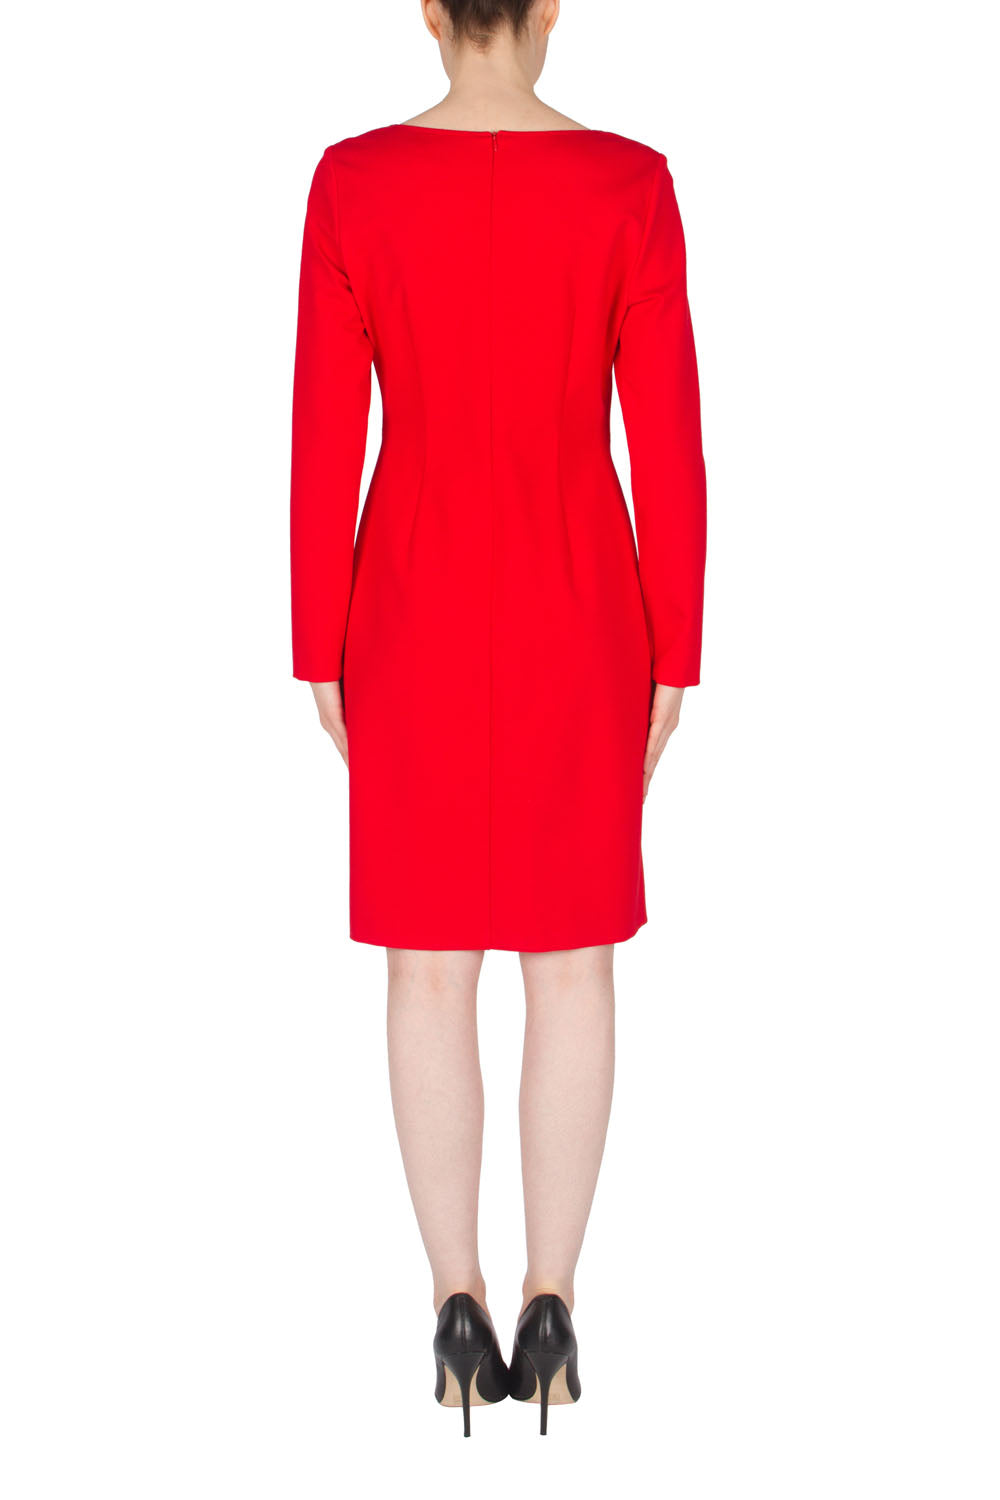 Joseph Ribkoff Red Dress Style 173316X